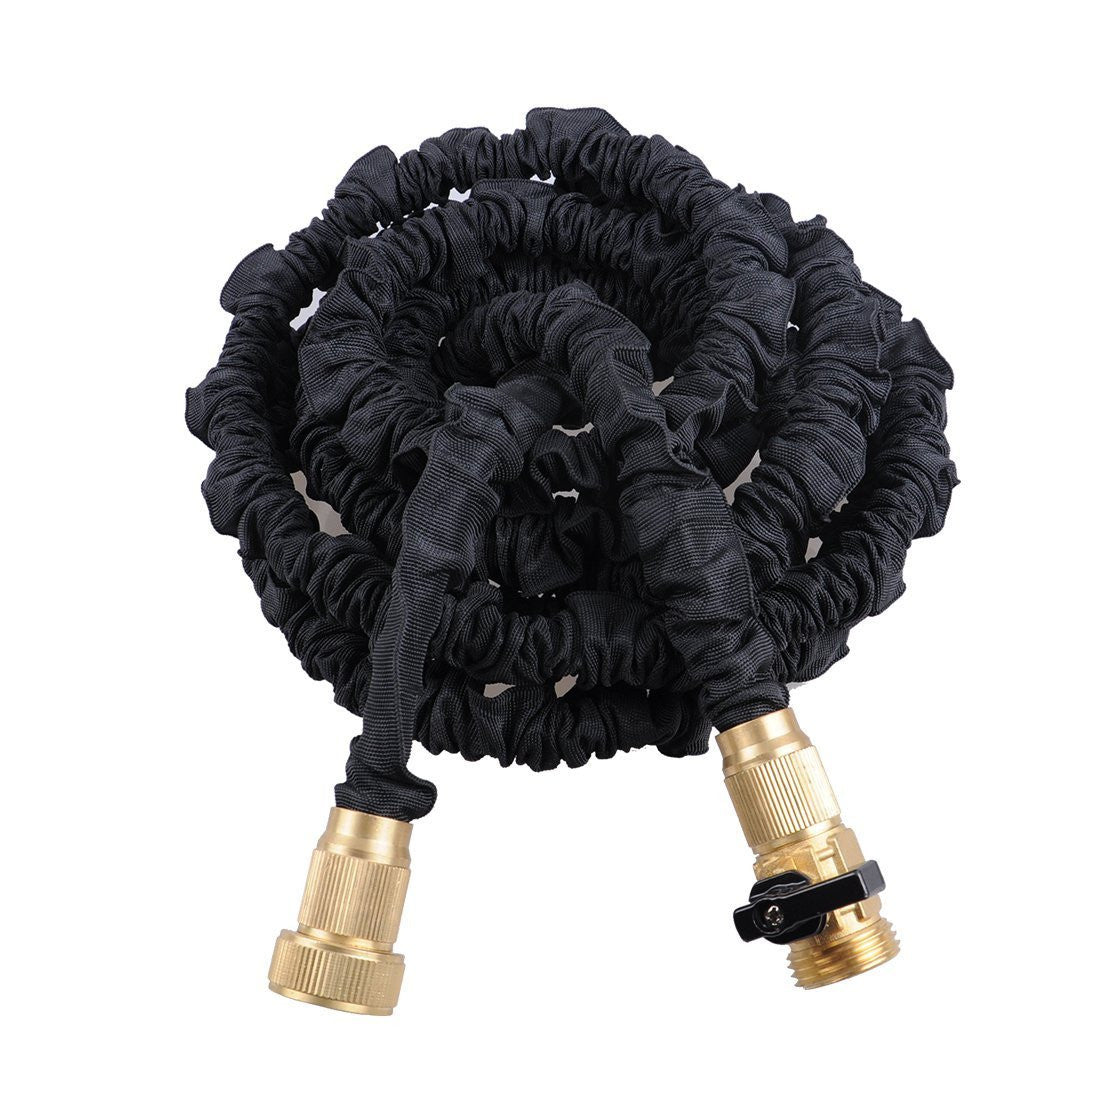 Felji 50 Ft Expanding Garden Hose In Black With Solid Brass Fitting